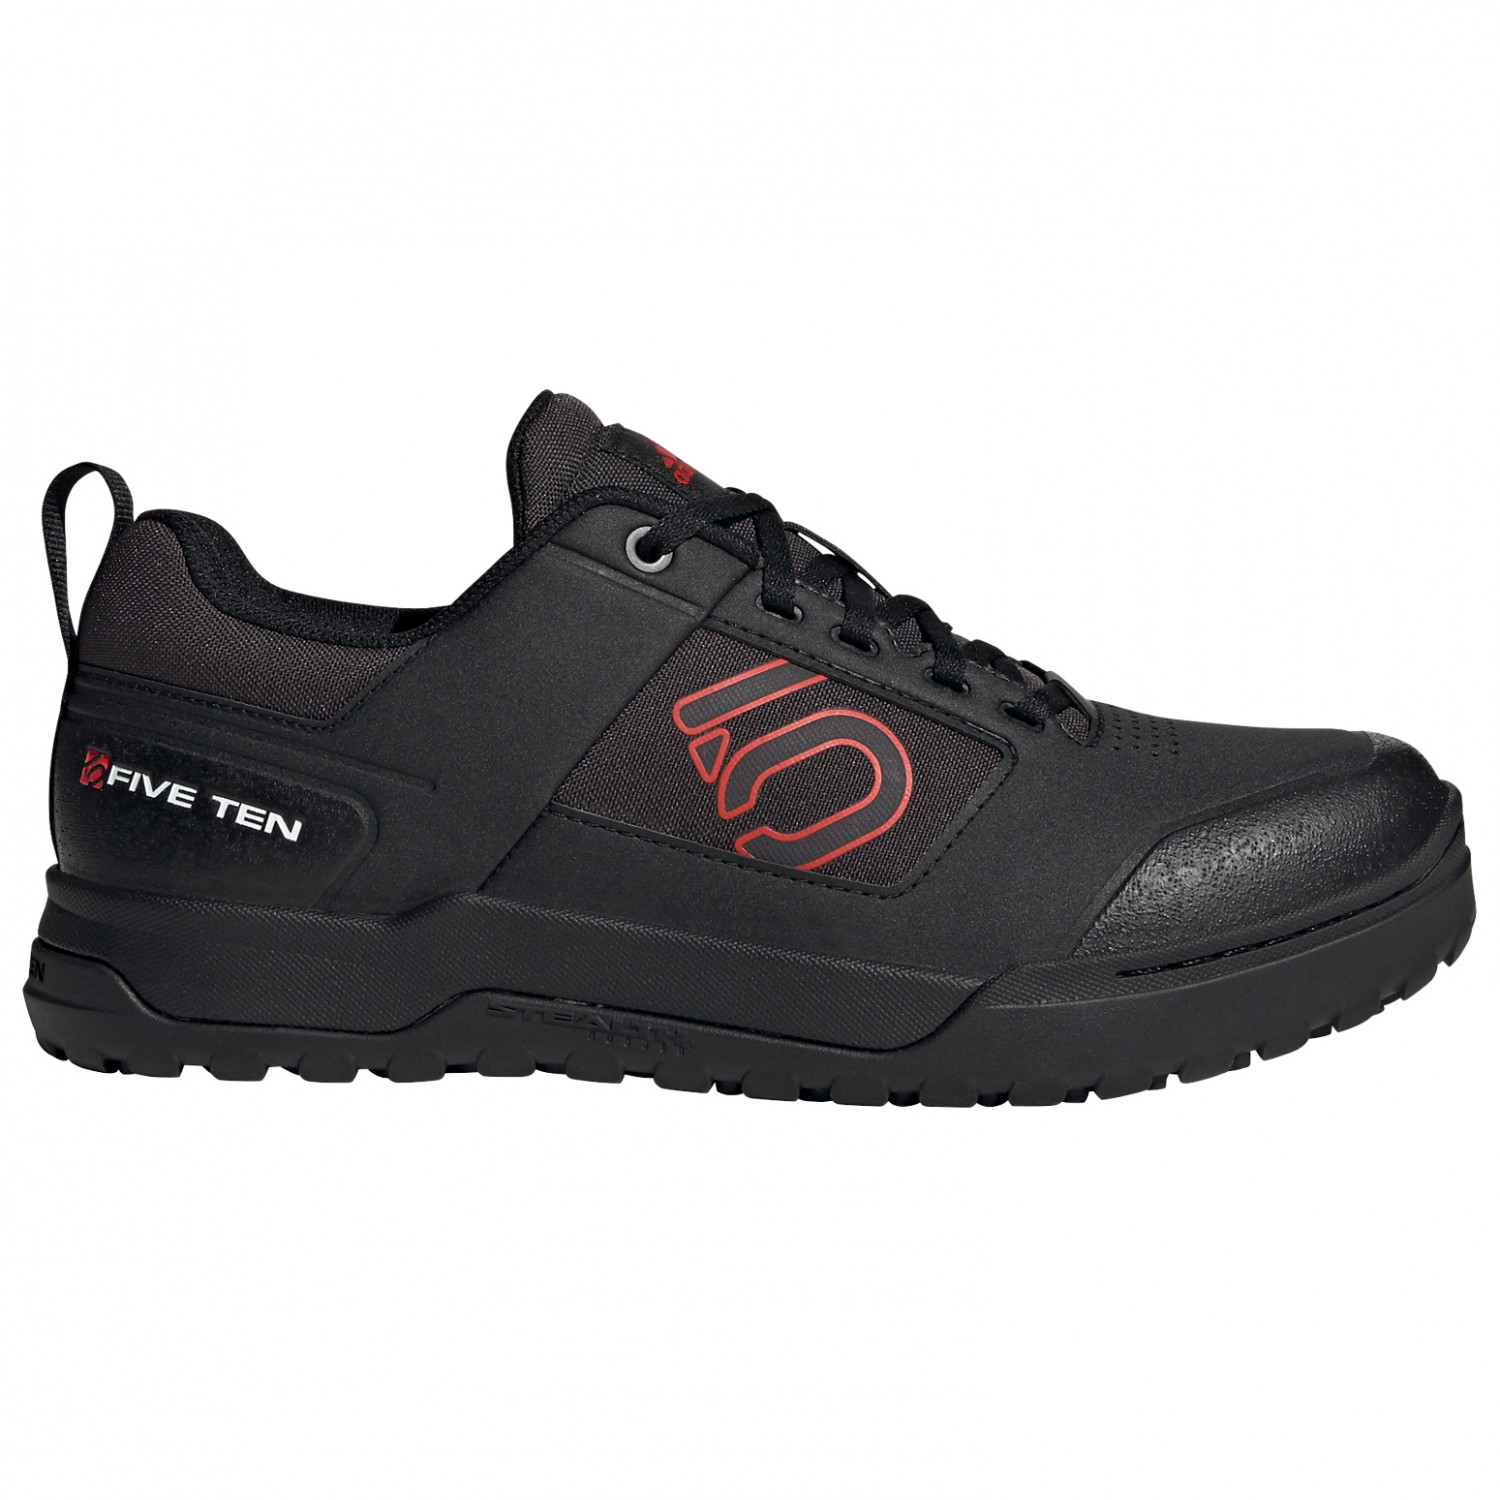 Велосипедная обувь Five Ten Impact Pro, цвет Core Black/Red/Ftwr White